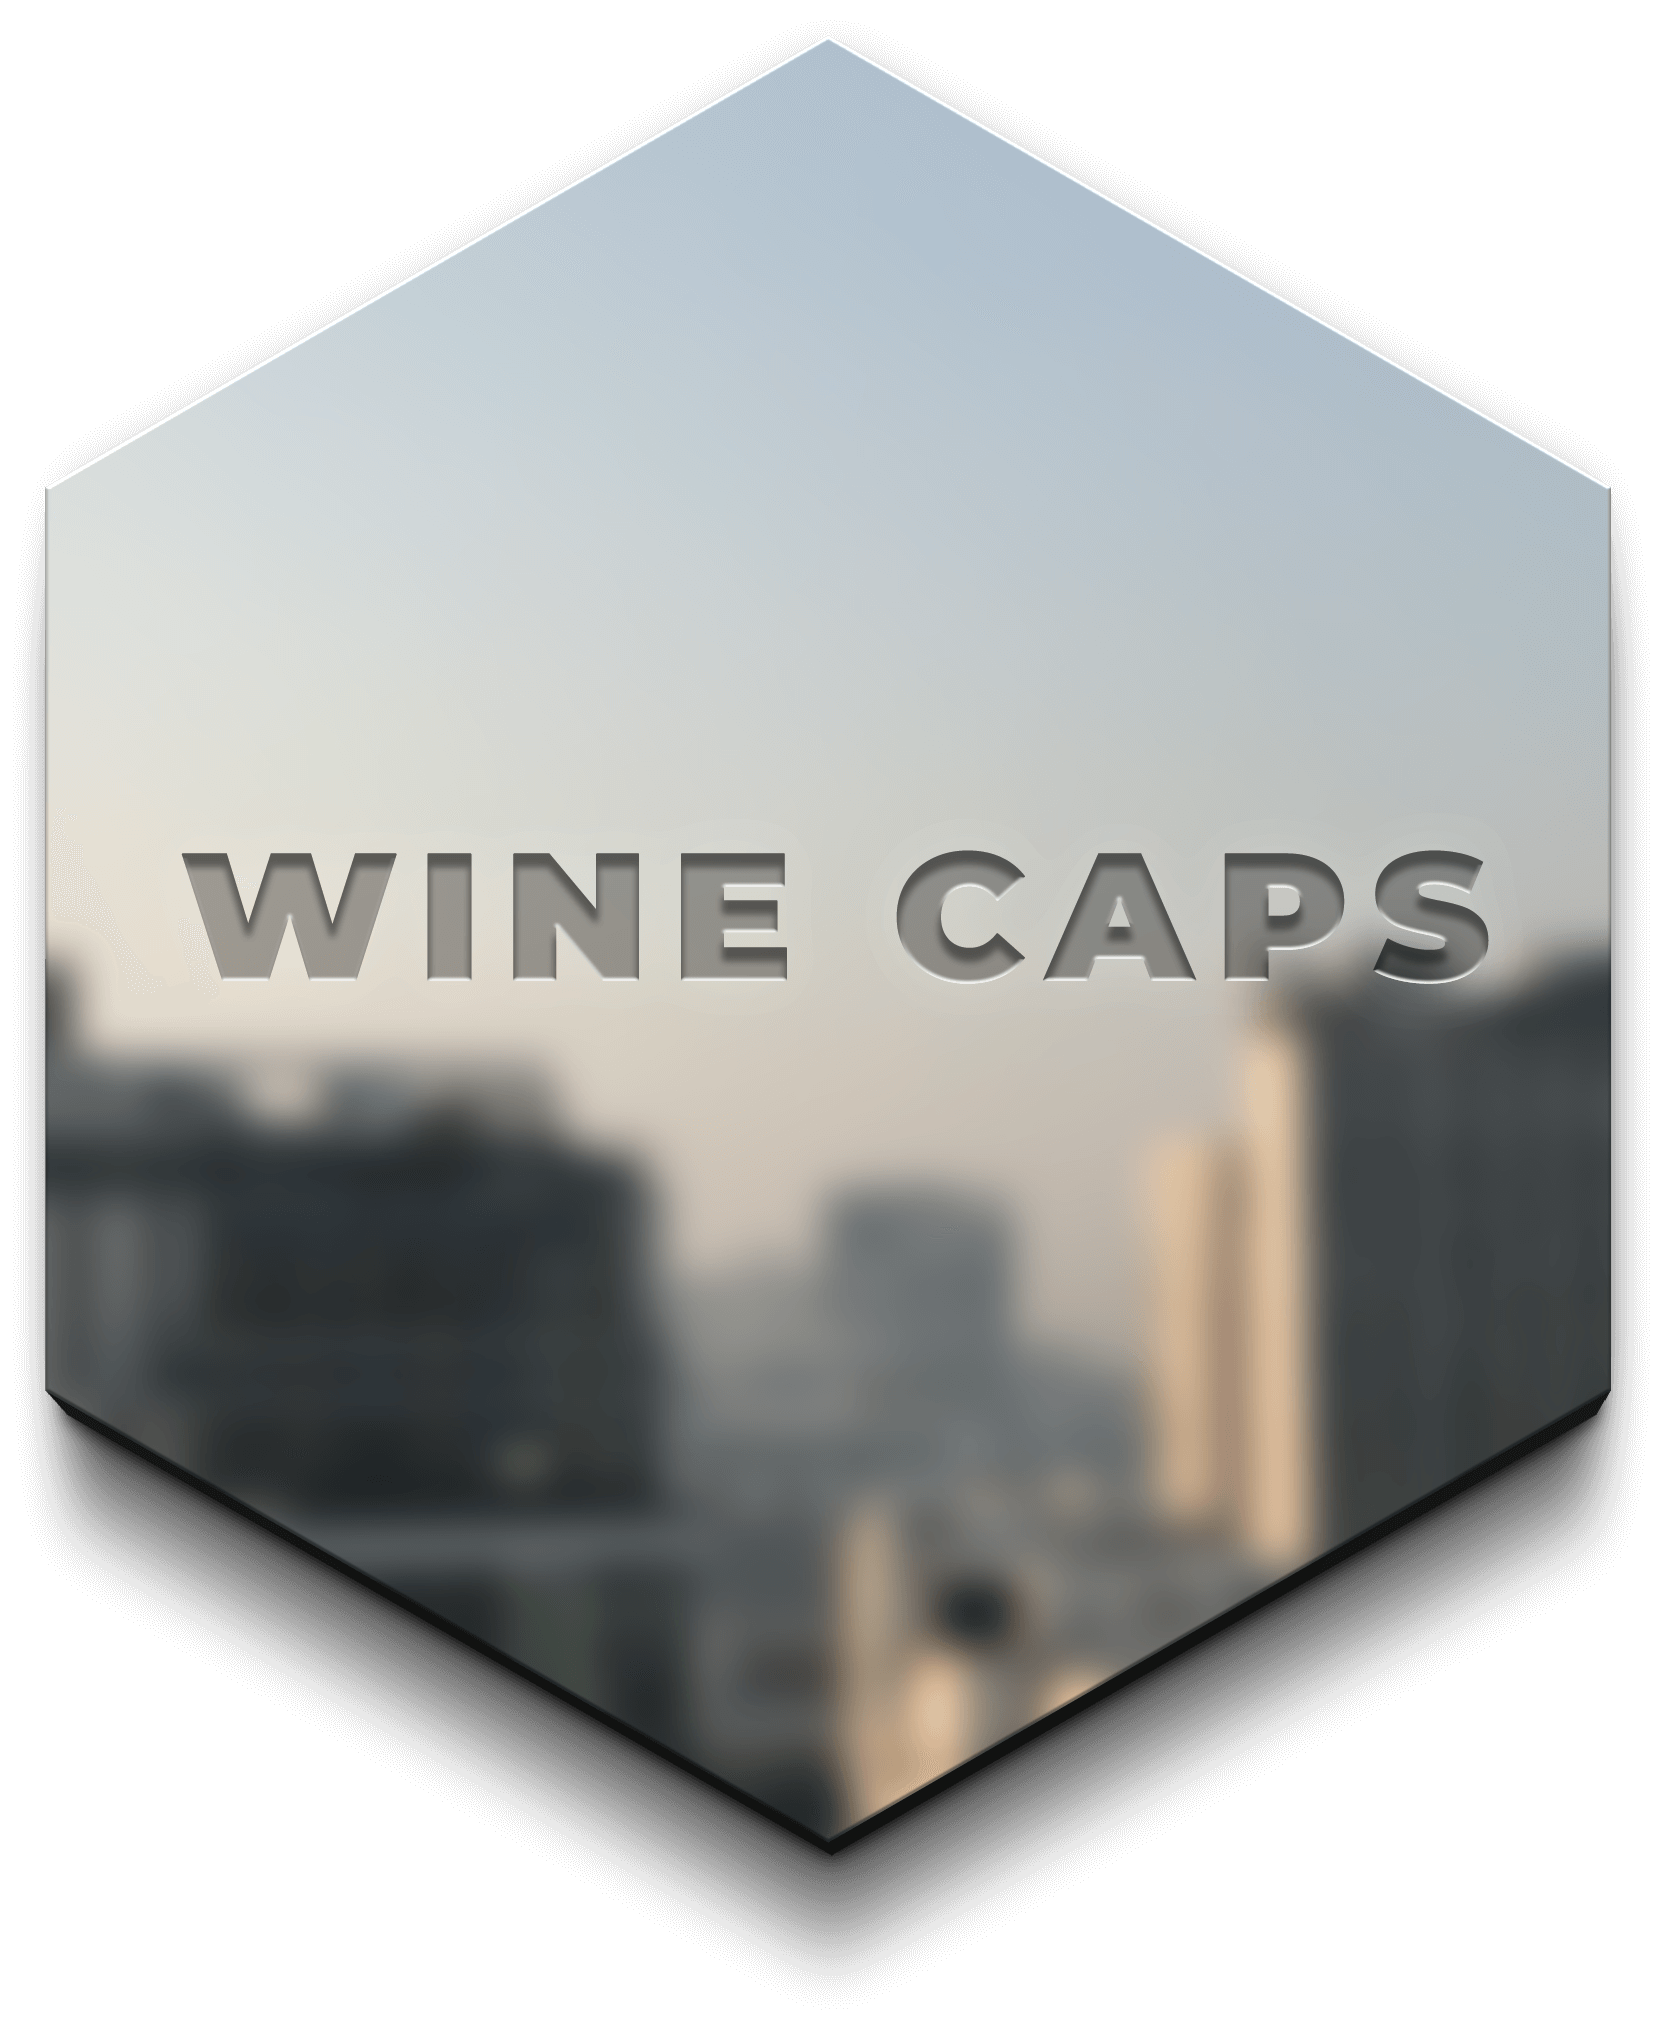 Wine caps